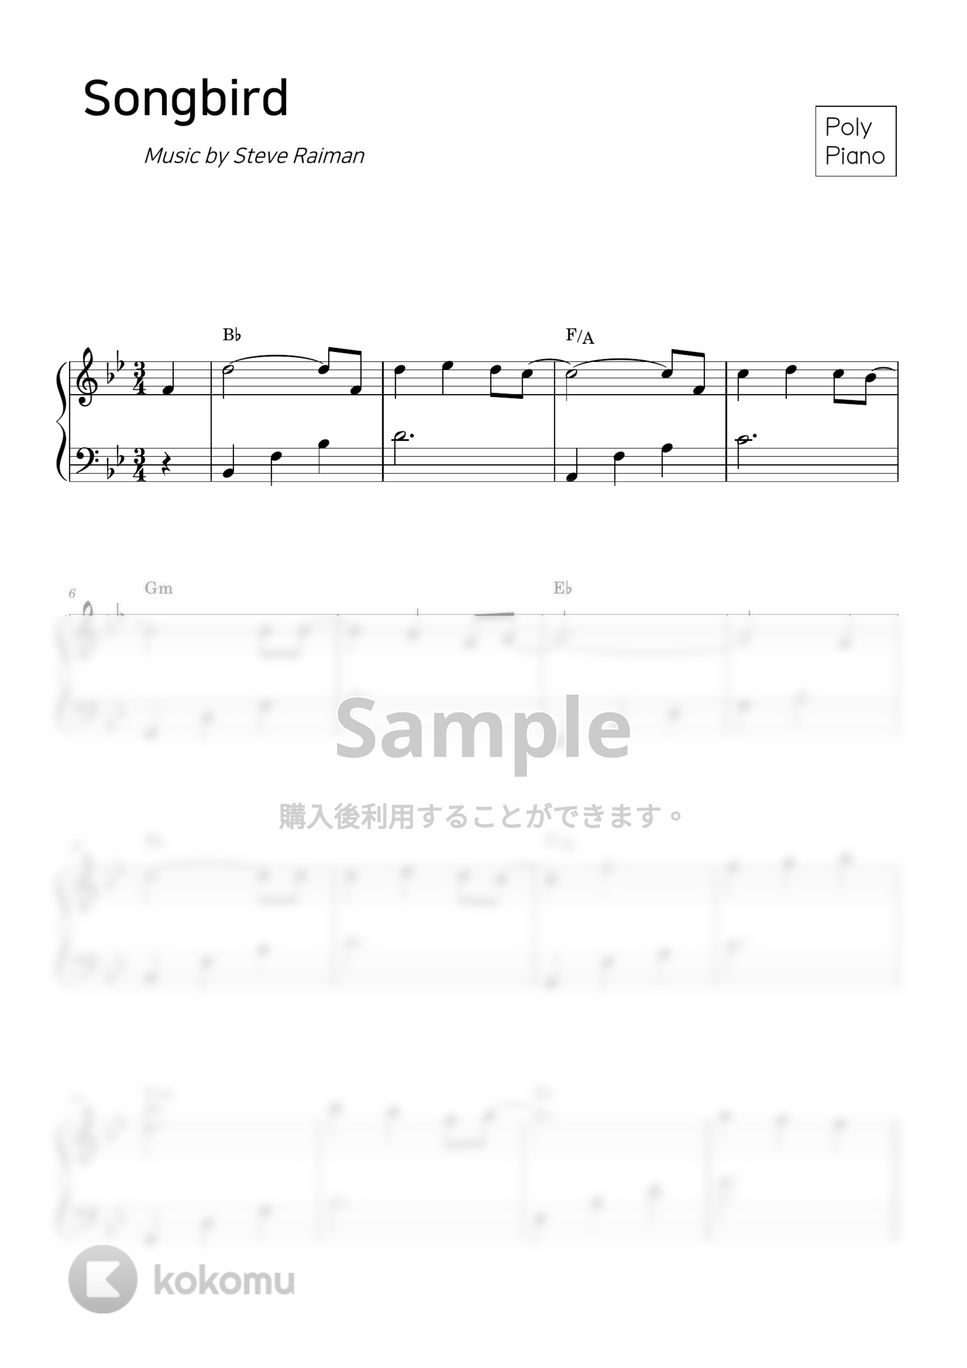 steve raiman - Songbird (やさしいピアノ演奏曲) by POLYPiano